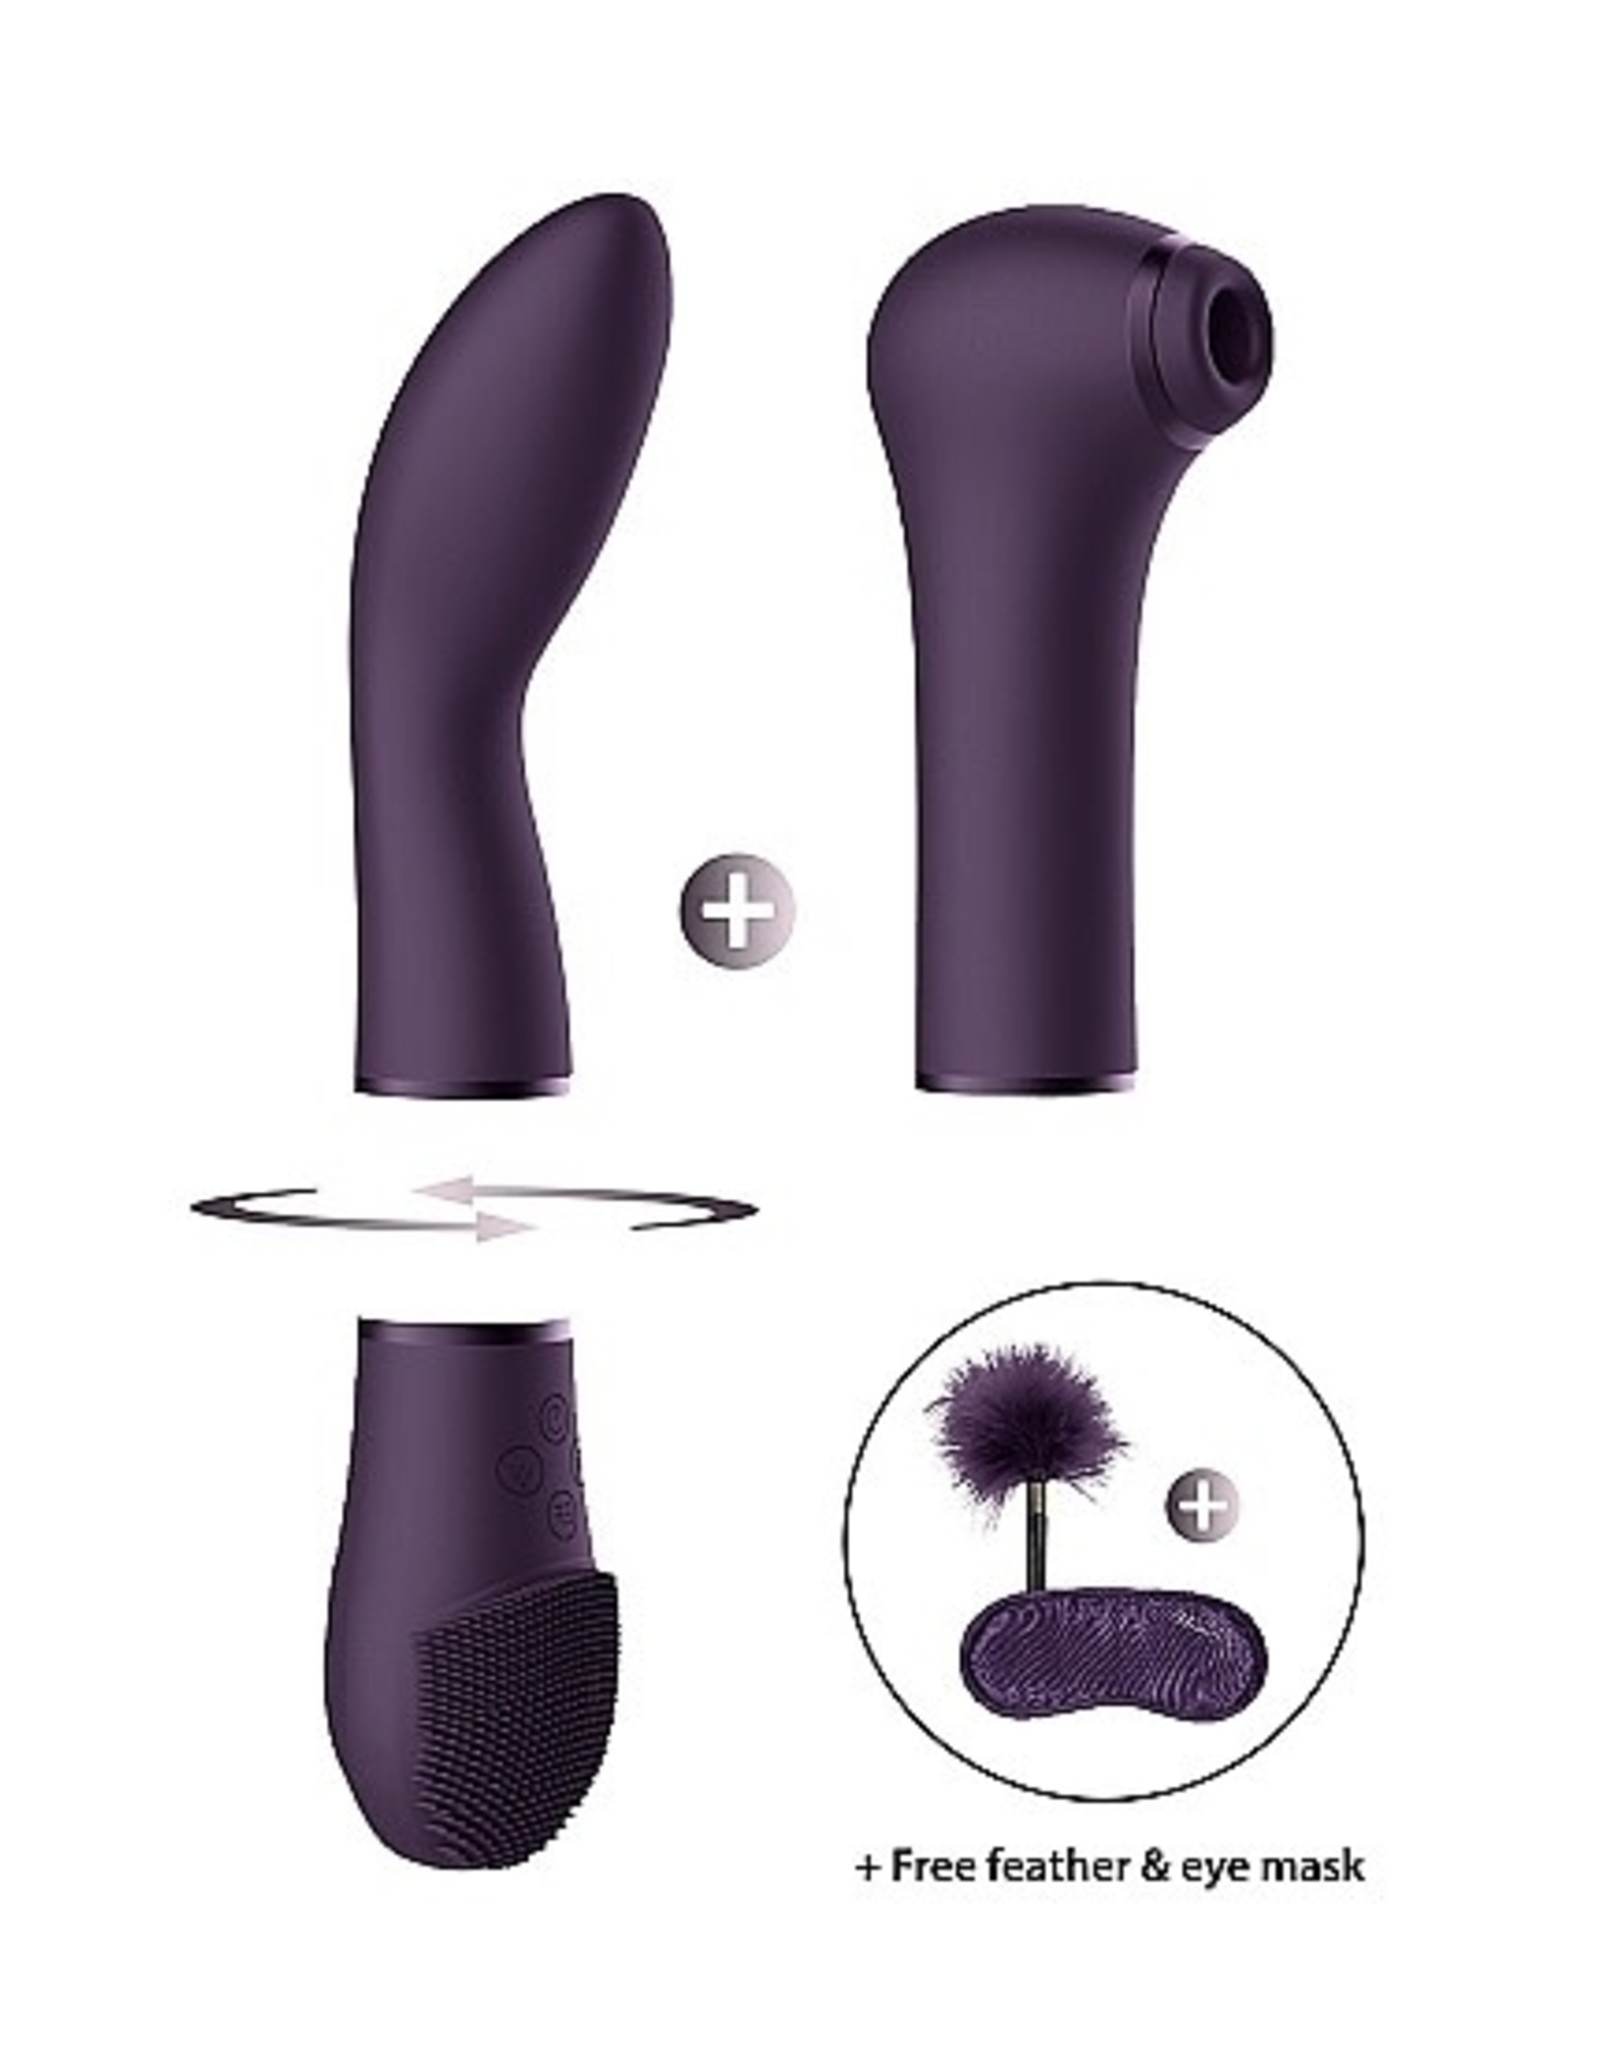 Shots Shots - Switch - Pleasure Kit #2 (purple)